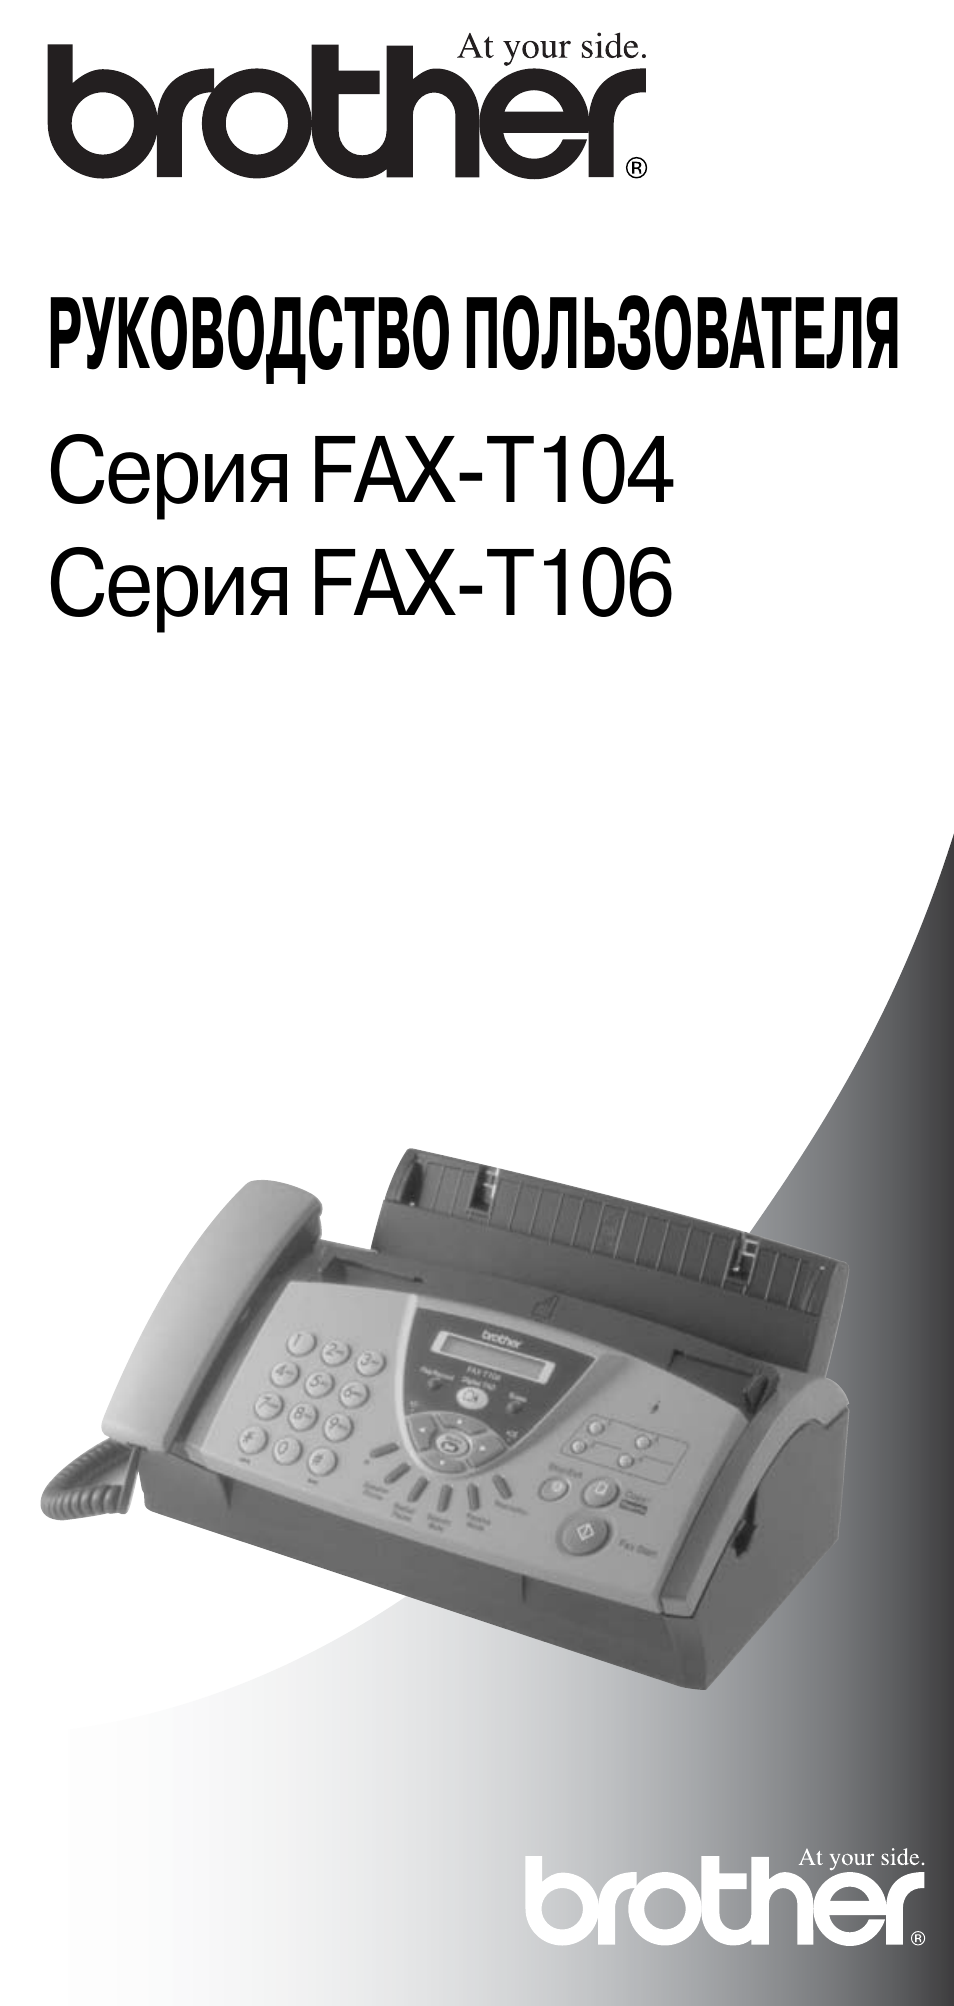 Brother fax t104 инструкция